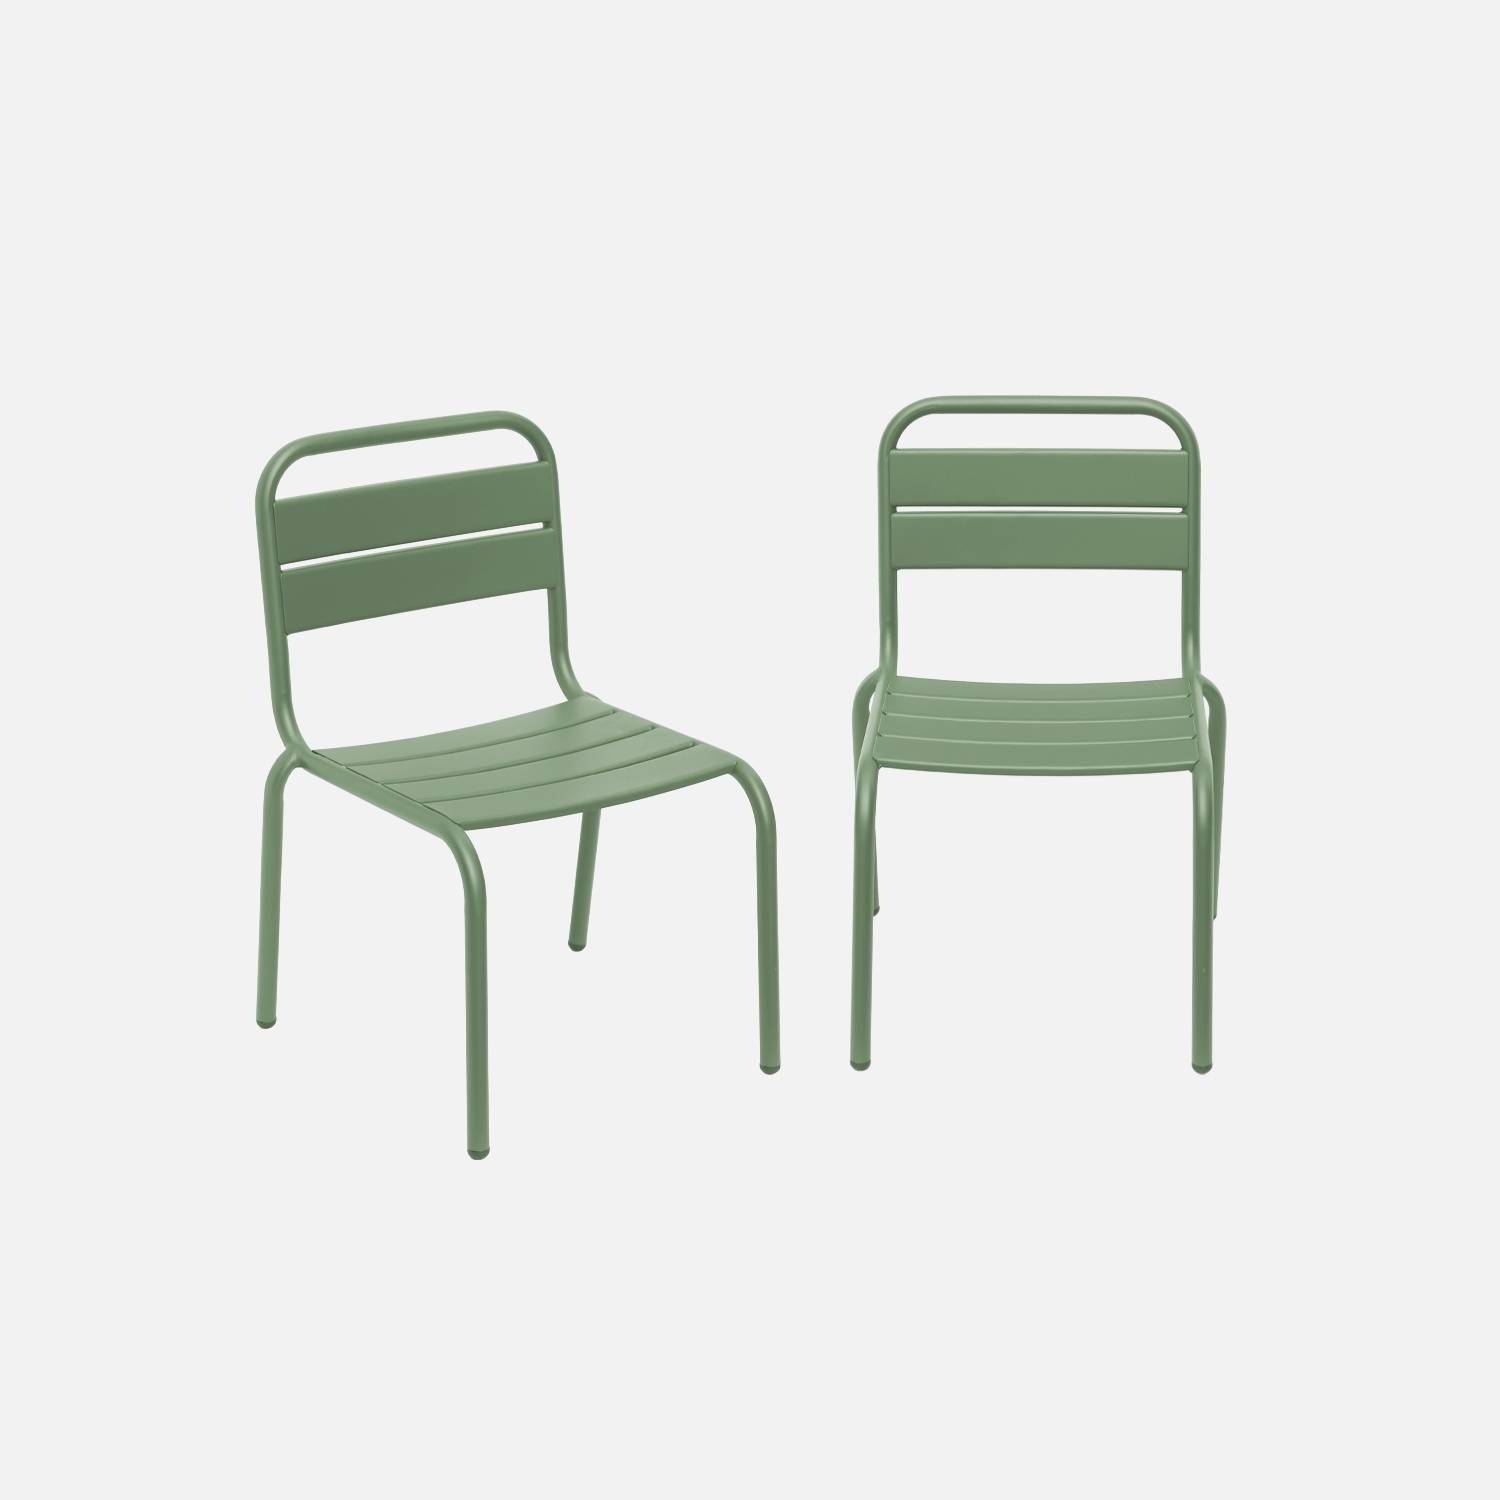 Set of 2 metal chairs for children, Khaki Green